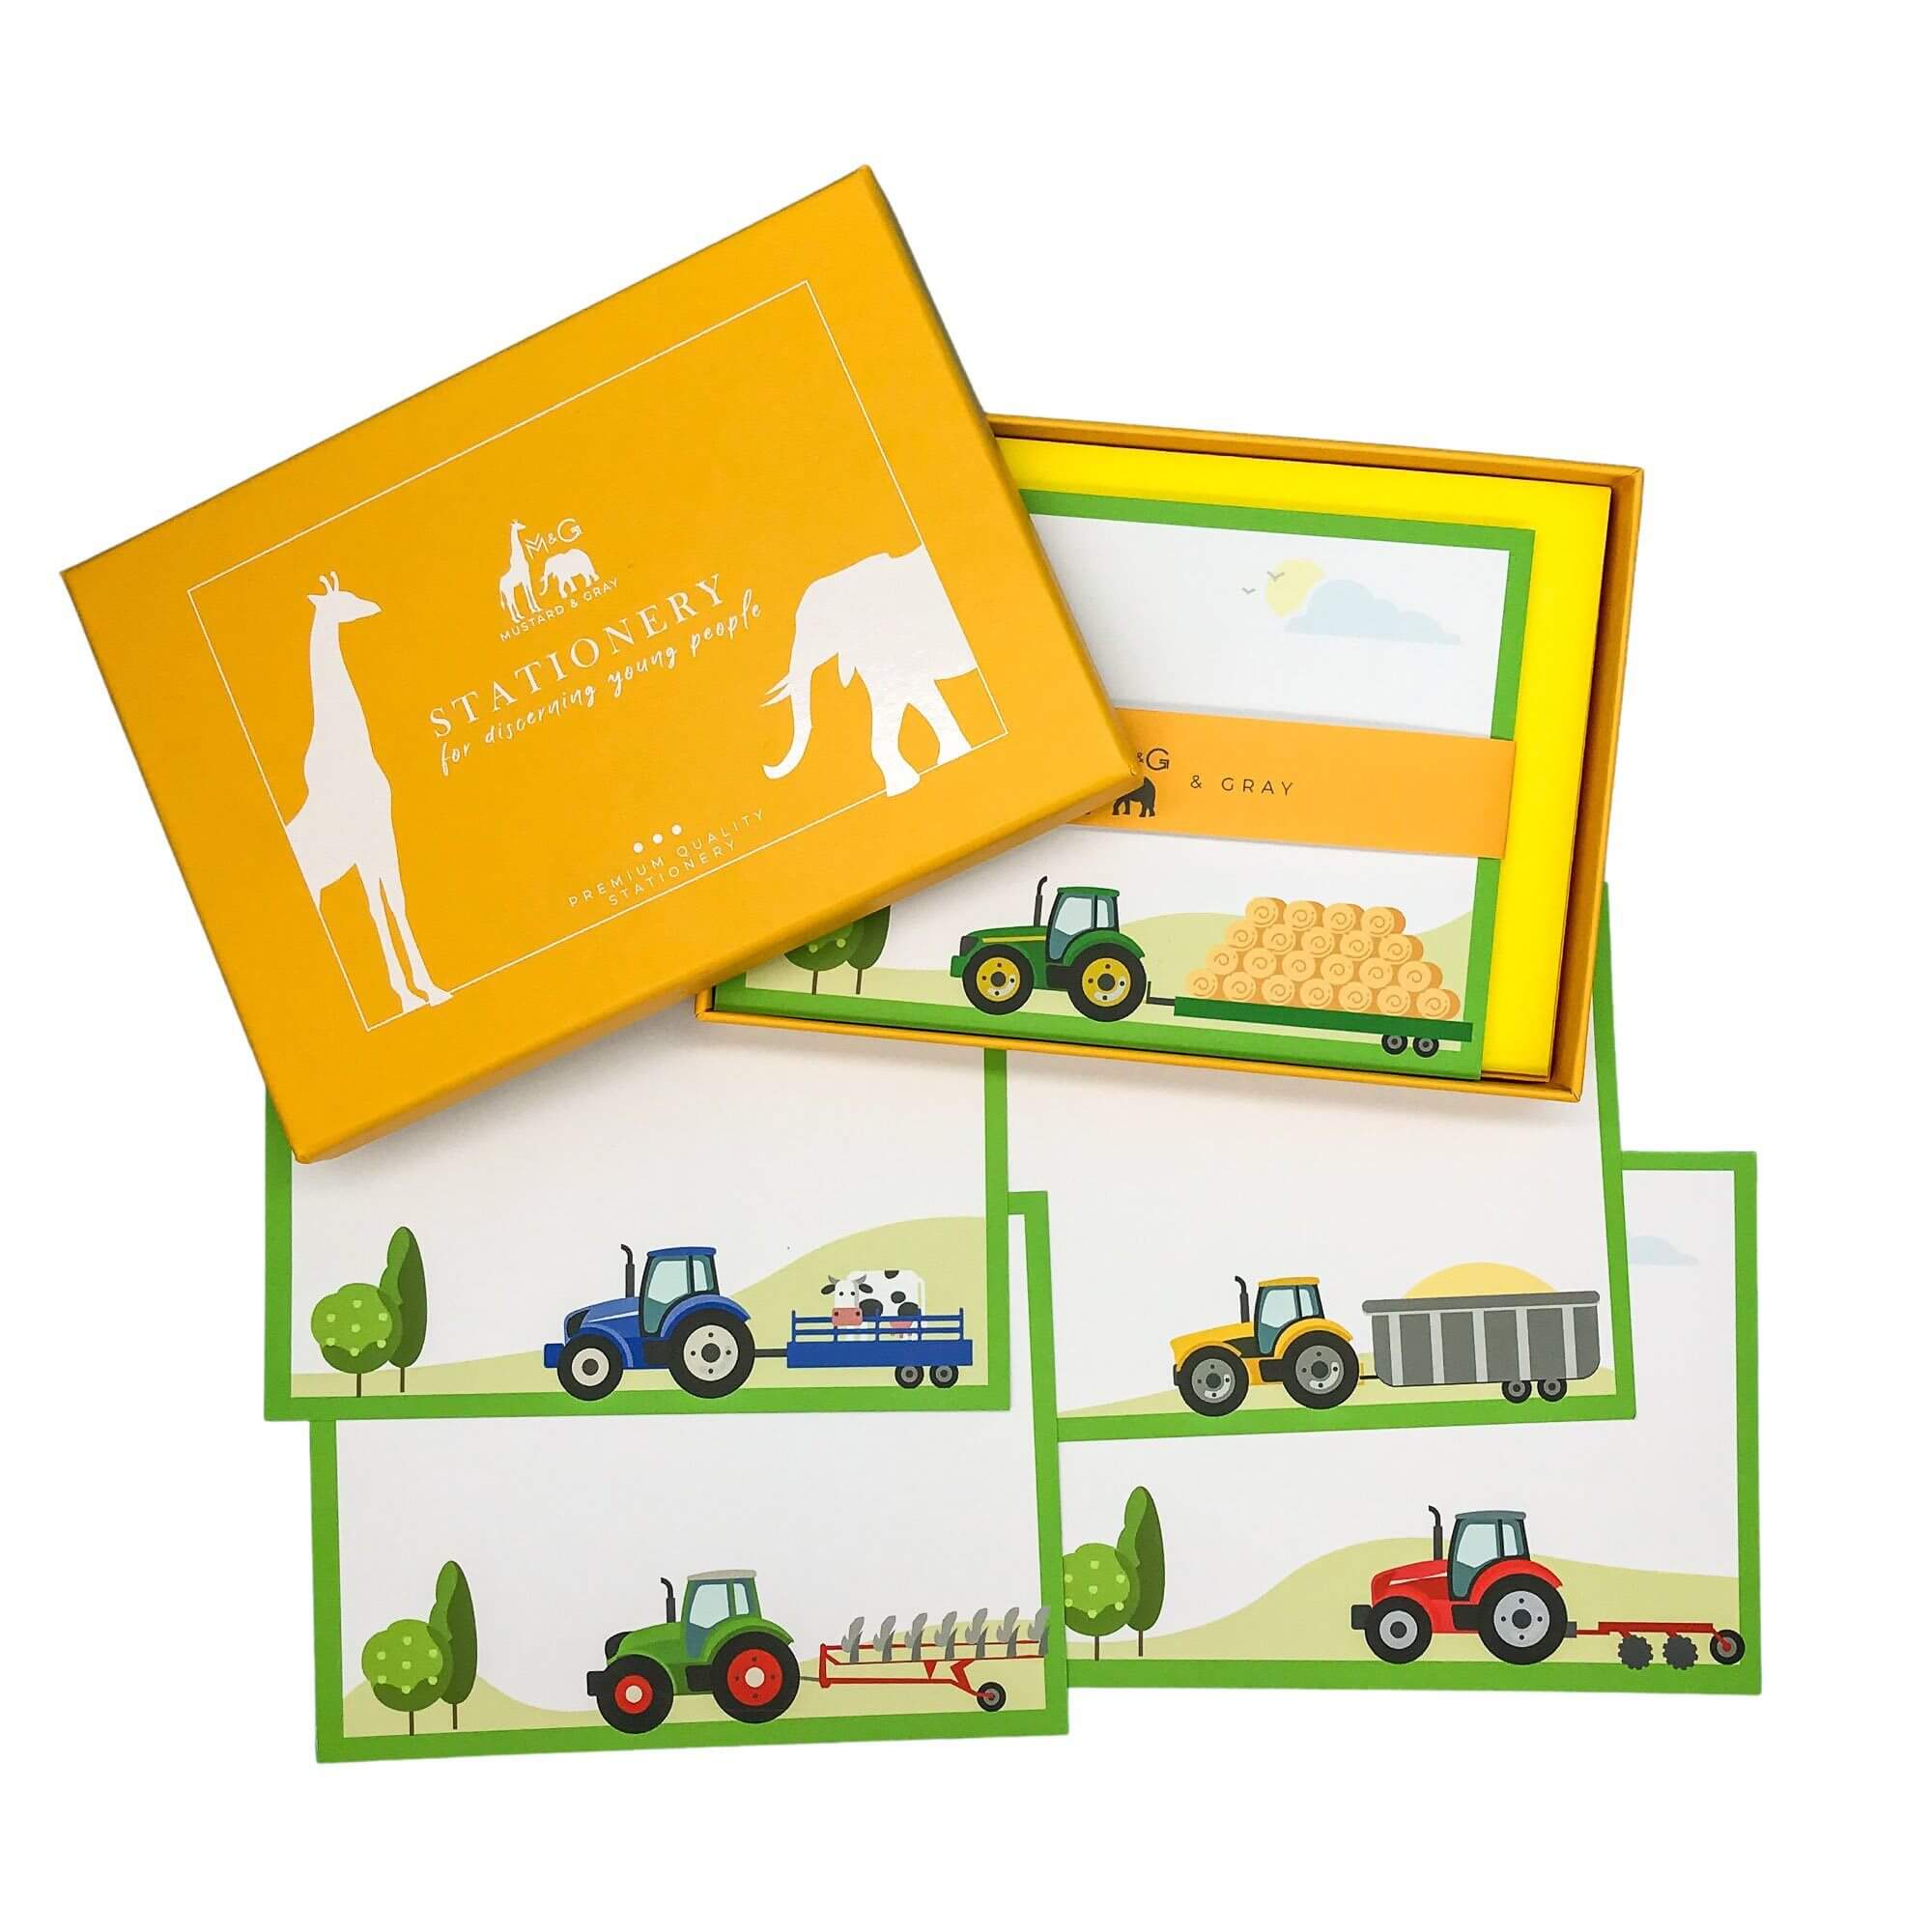 Bramble Hill Farm Tractors Notecard Set Children's Notecards Mustard and Gray Ltd Shropshire UK